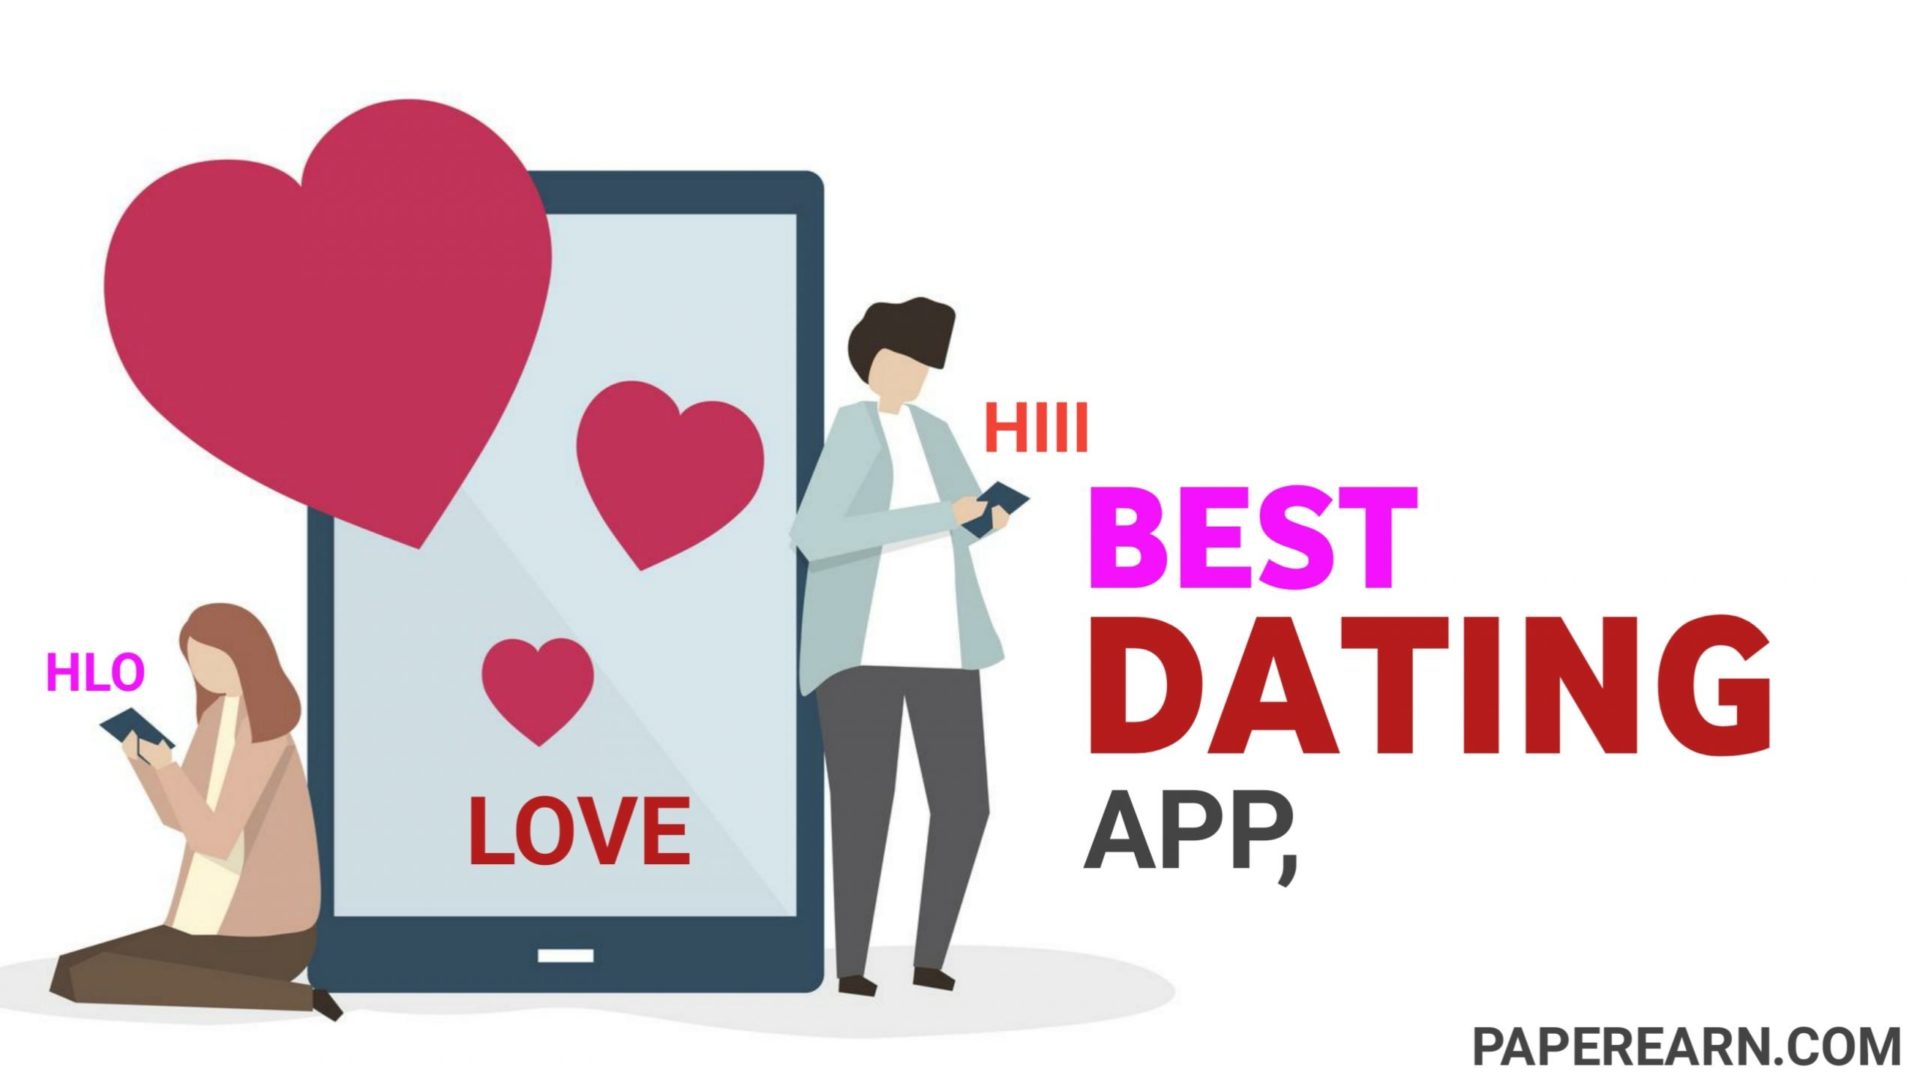 BestSmmPanel Online Dating Novices Guide Free Best Online Dating App scaled 1